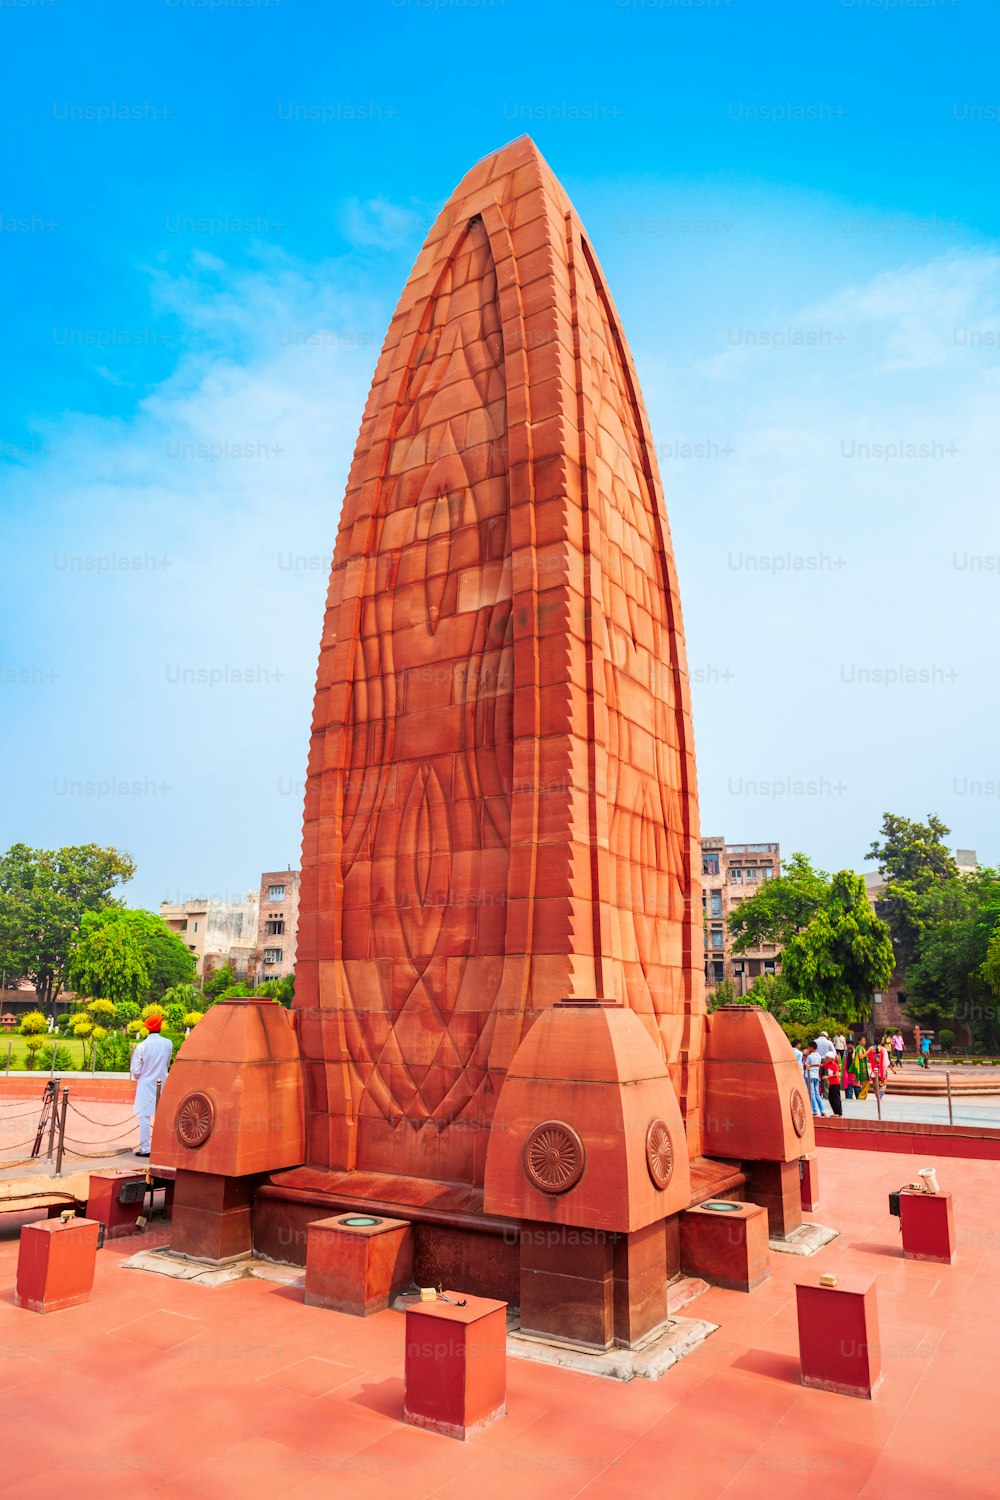 Jallianwala Bagh massacre memorial in Amritsar city, Punjab state of India